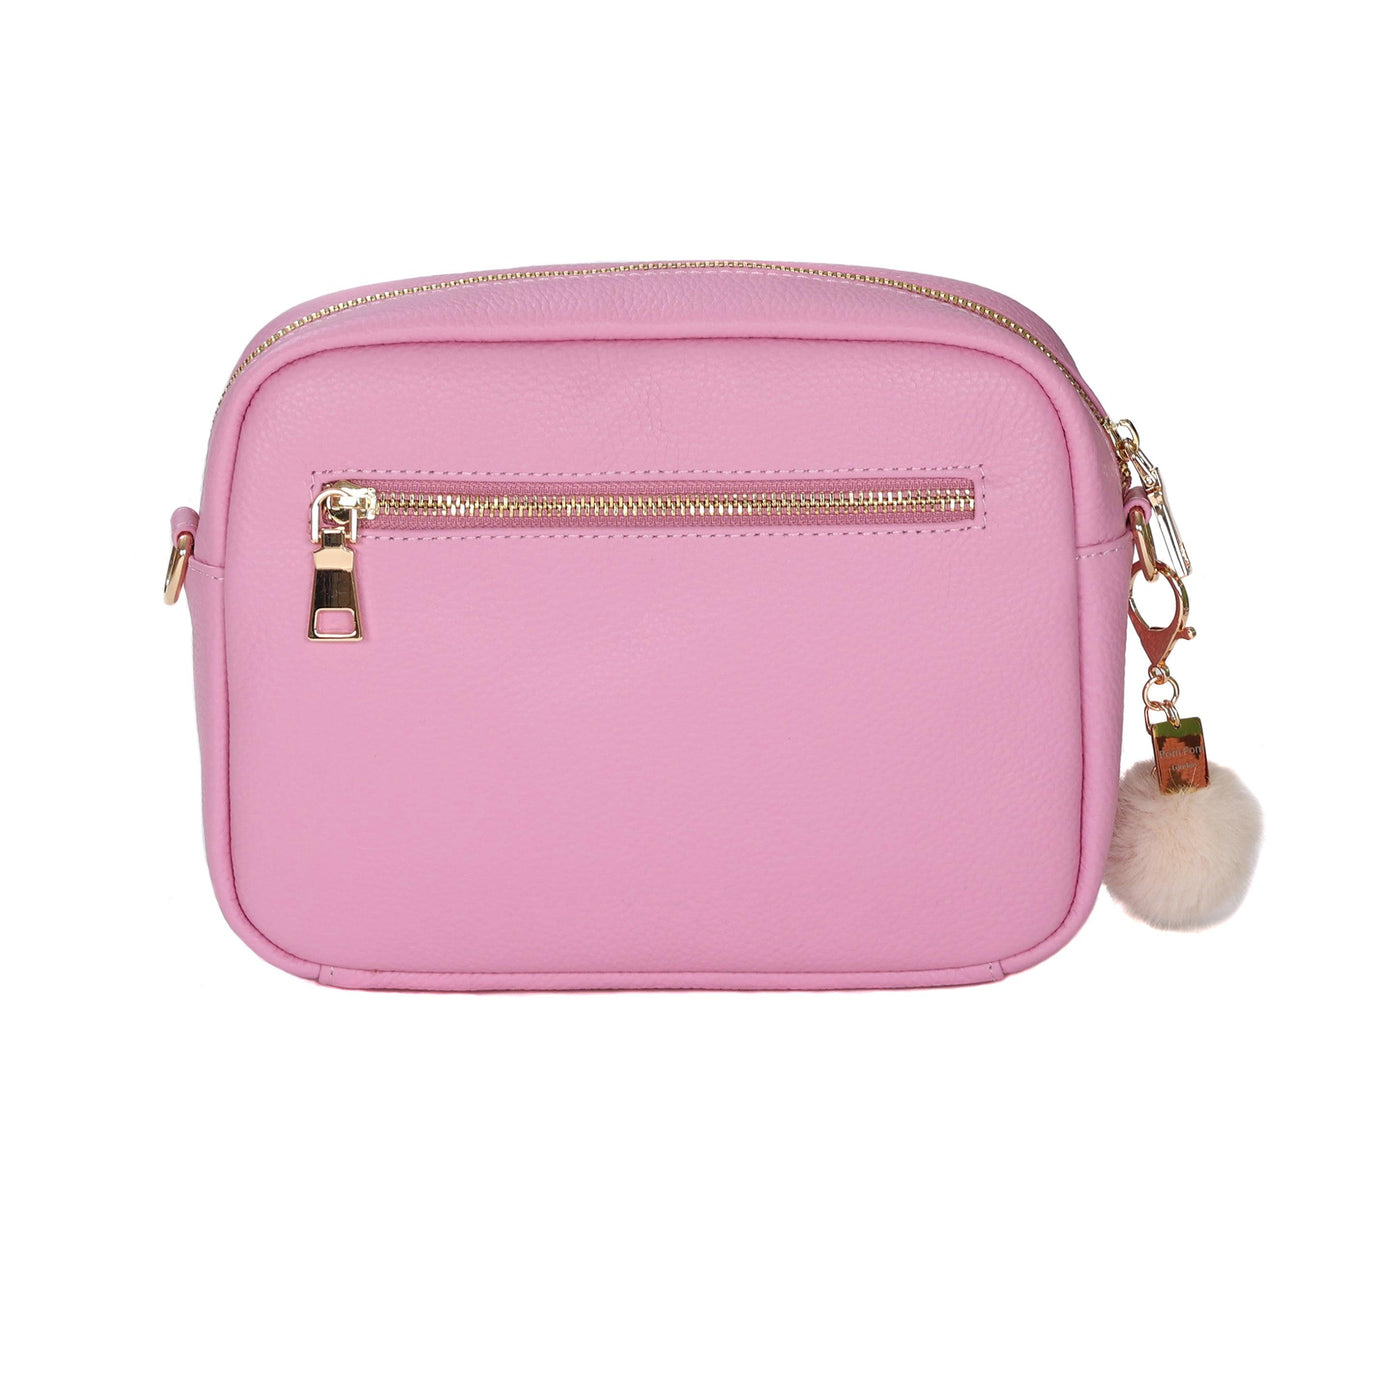 Mayfair Plus Bag Peony Pink & Accessories - Pom Pom London